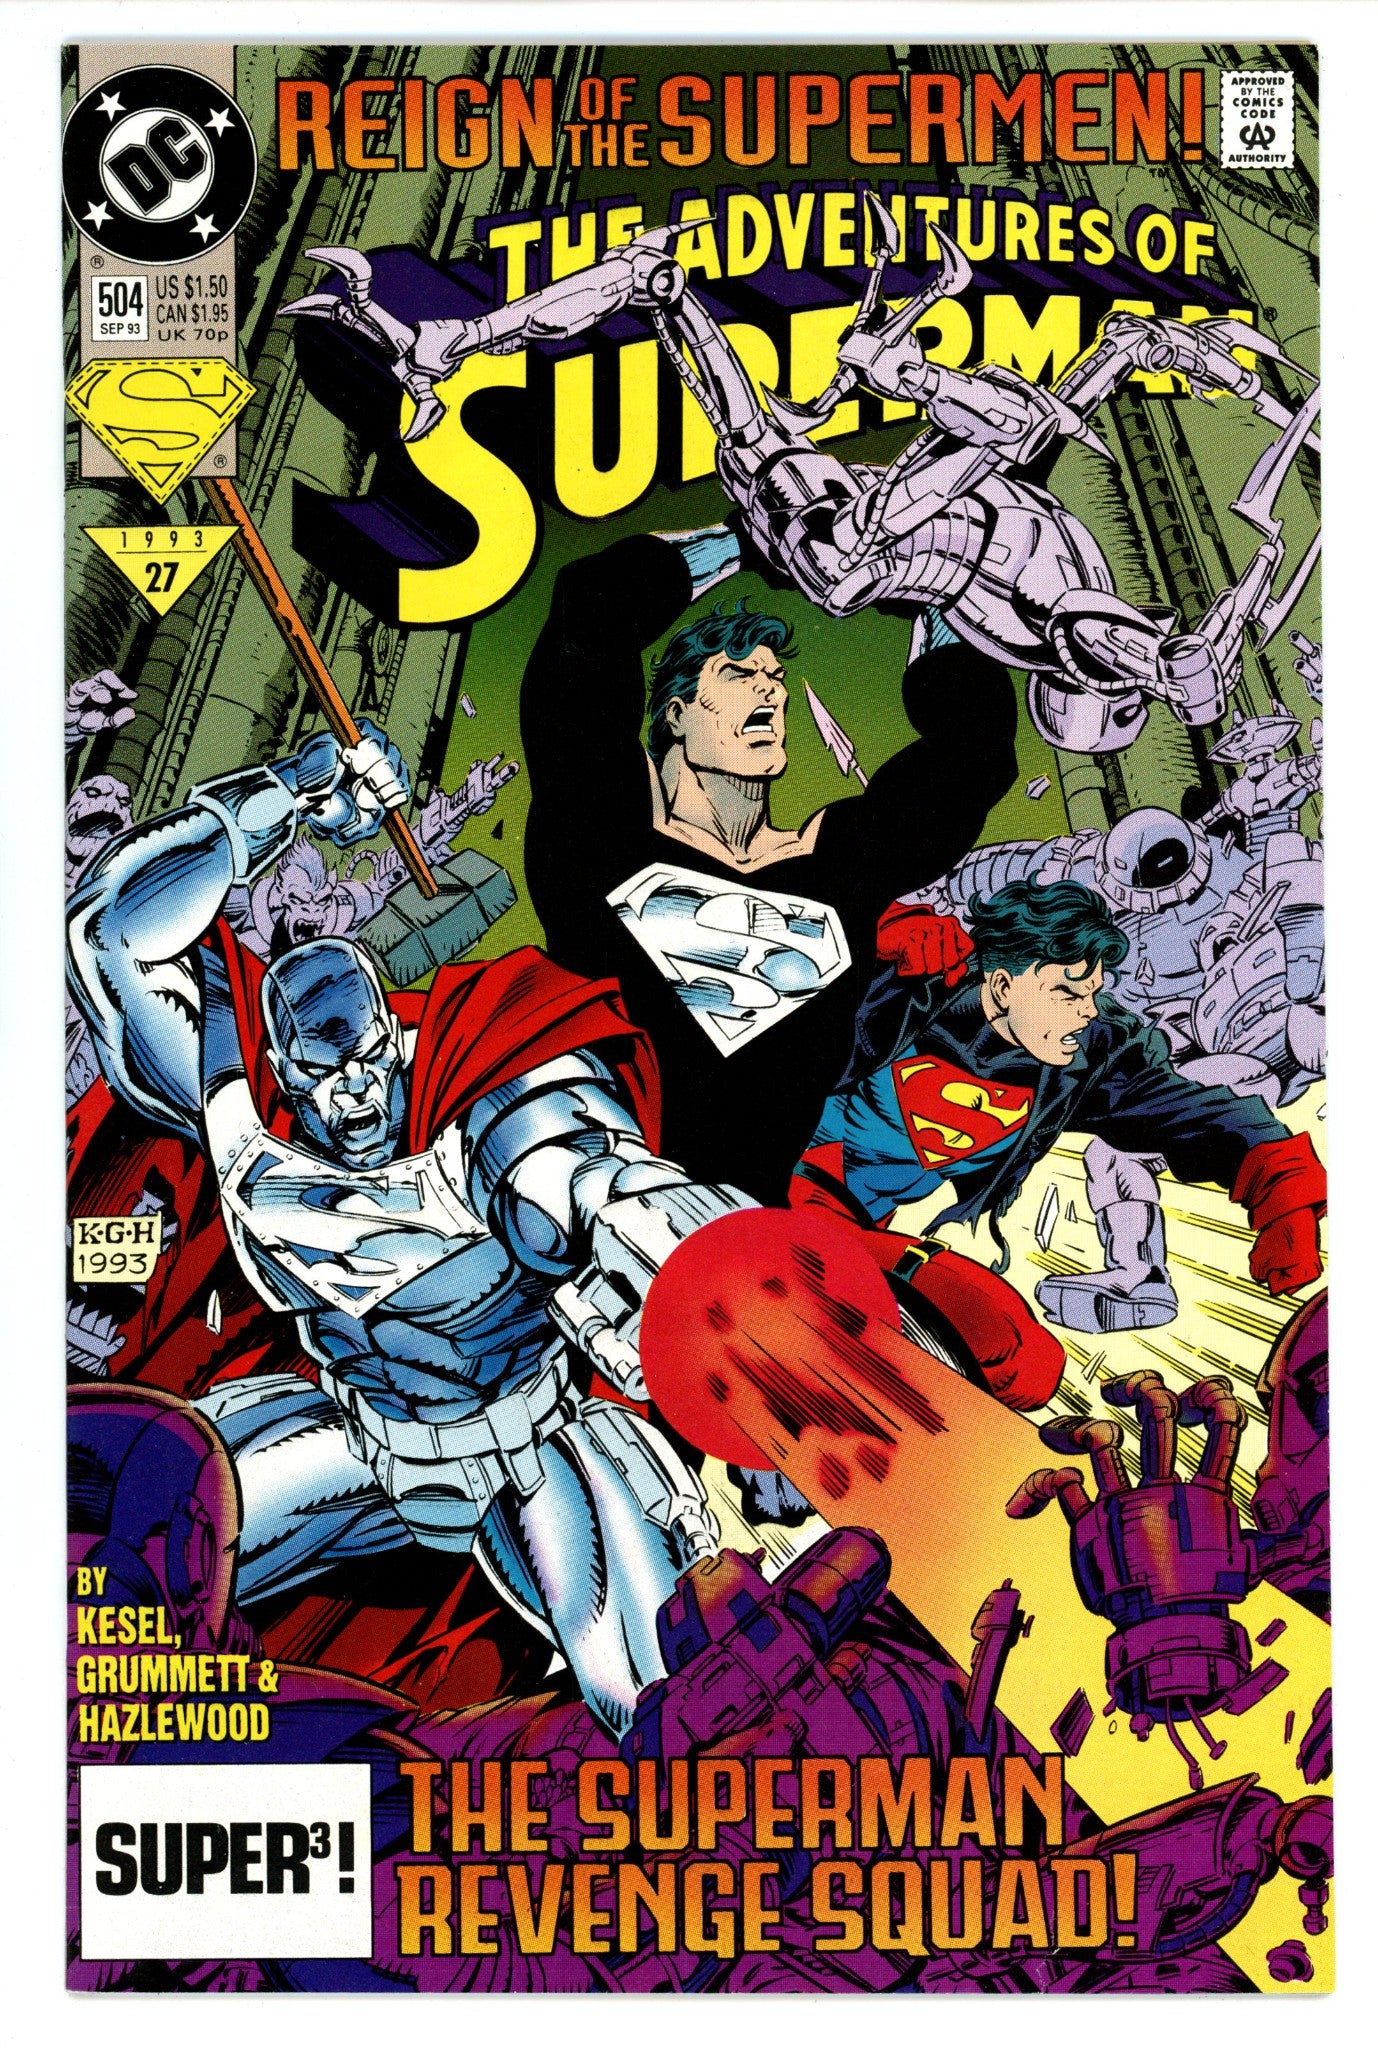 Adventures of Superman Vol 1 504 High Grade (1993) 